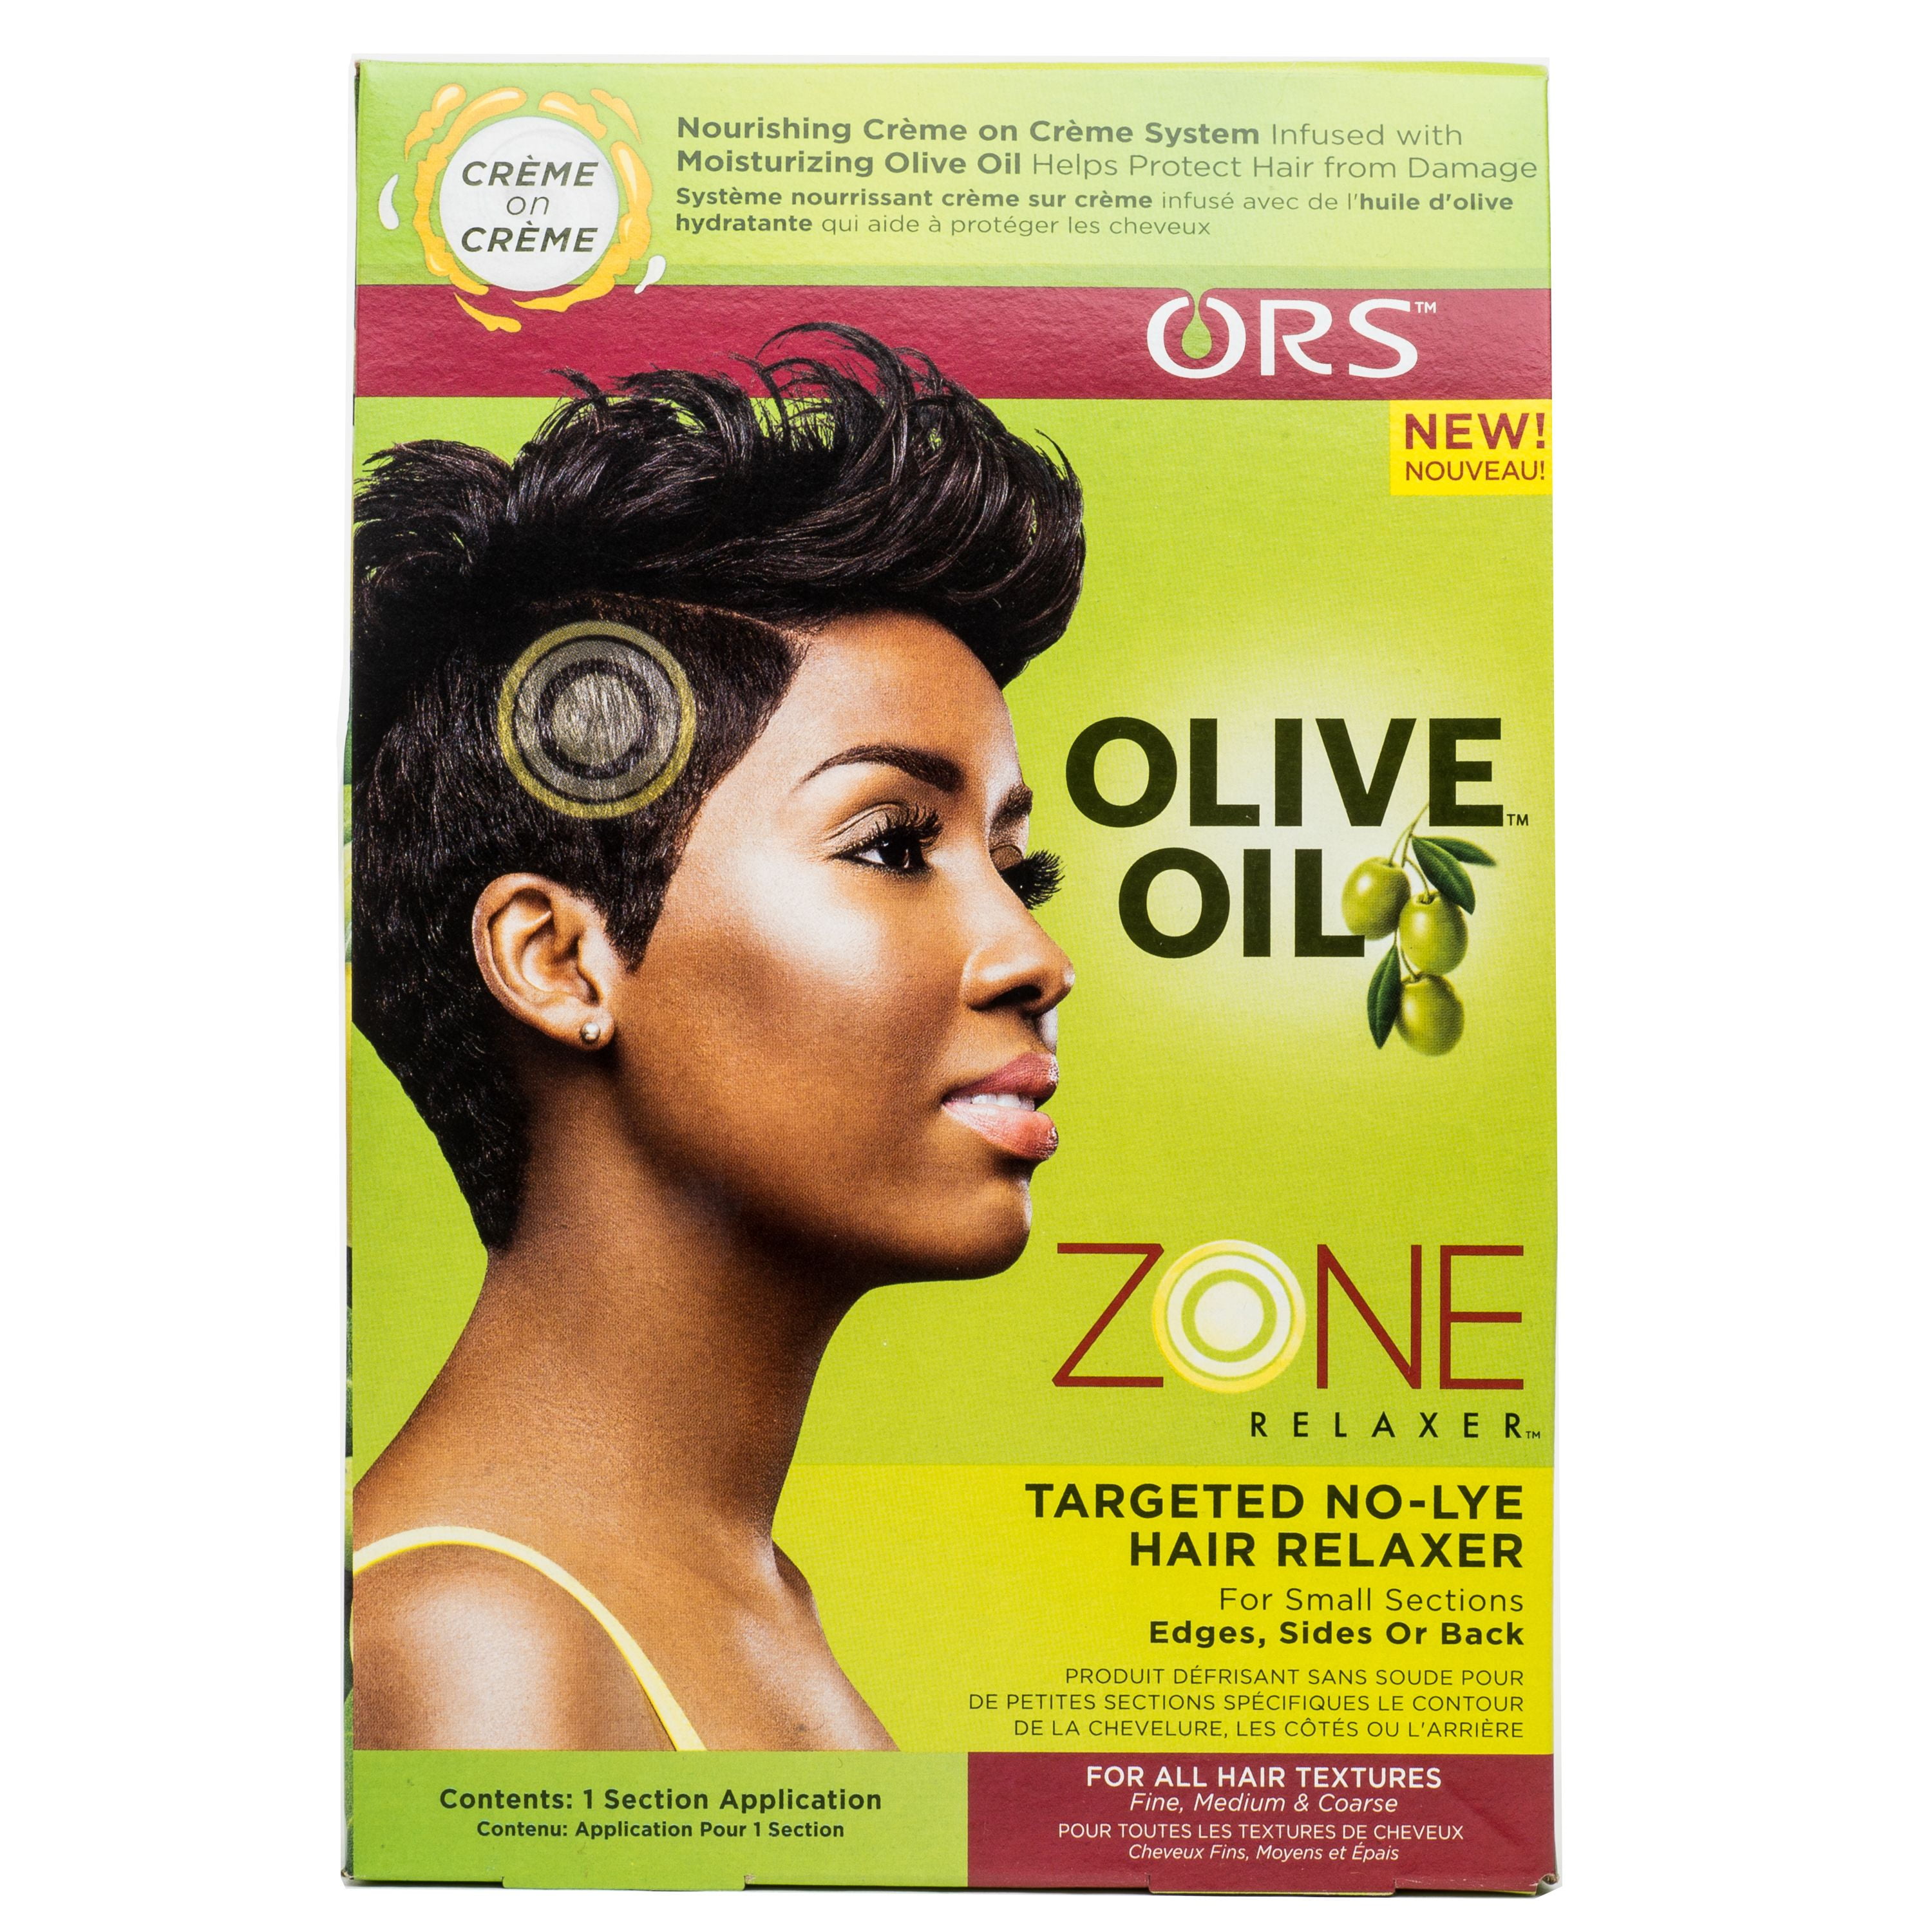 Ors Olive Oil Zone Relaxer Kit Walmart Com Walmart Com